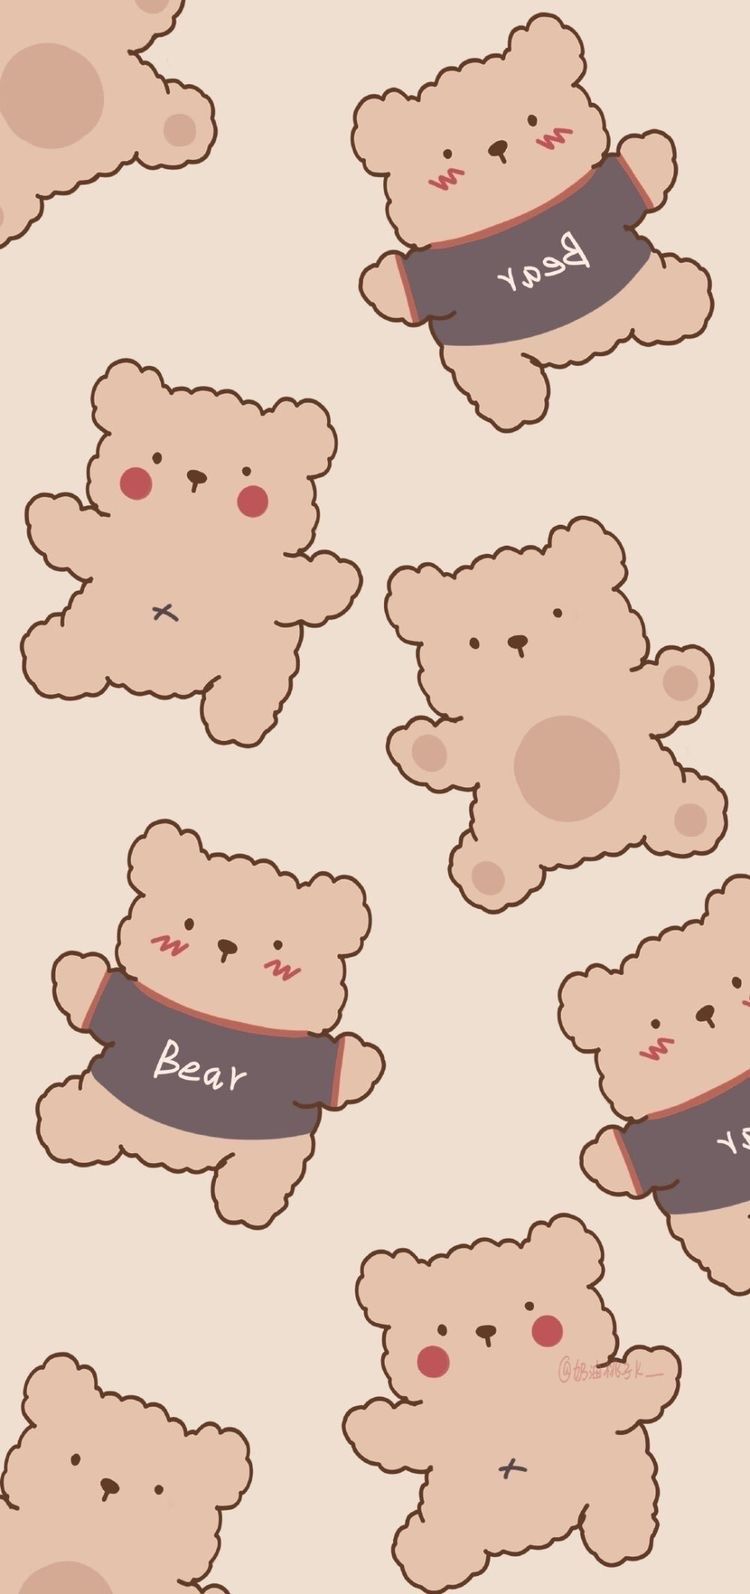 A pattern of teddy bears on white background - Teddy bear